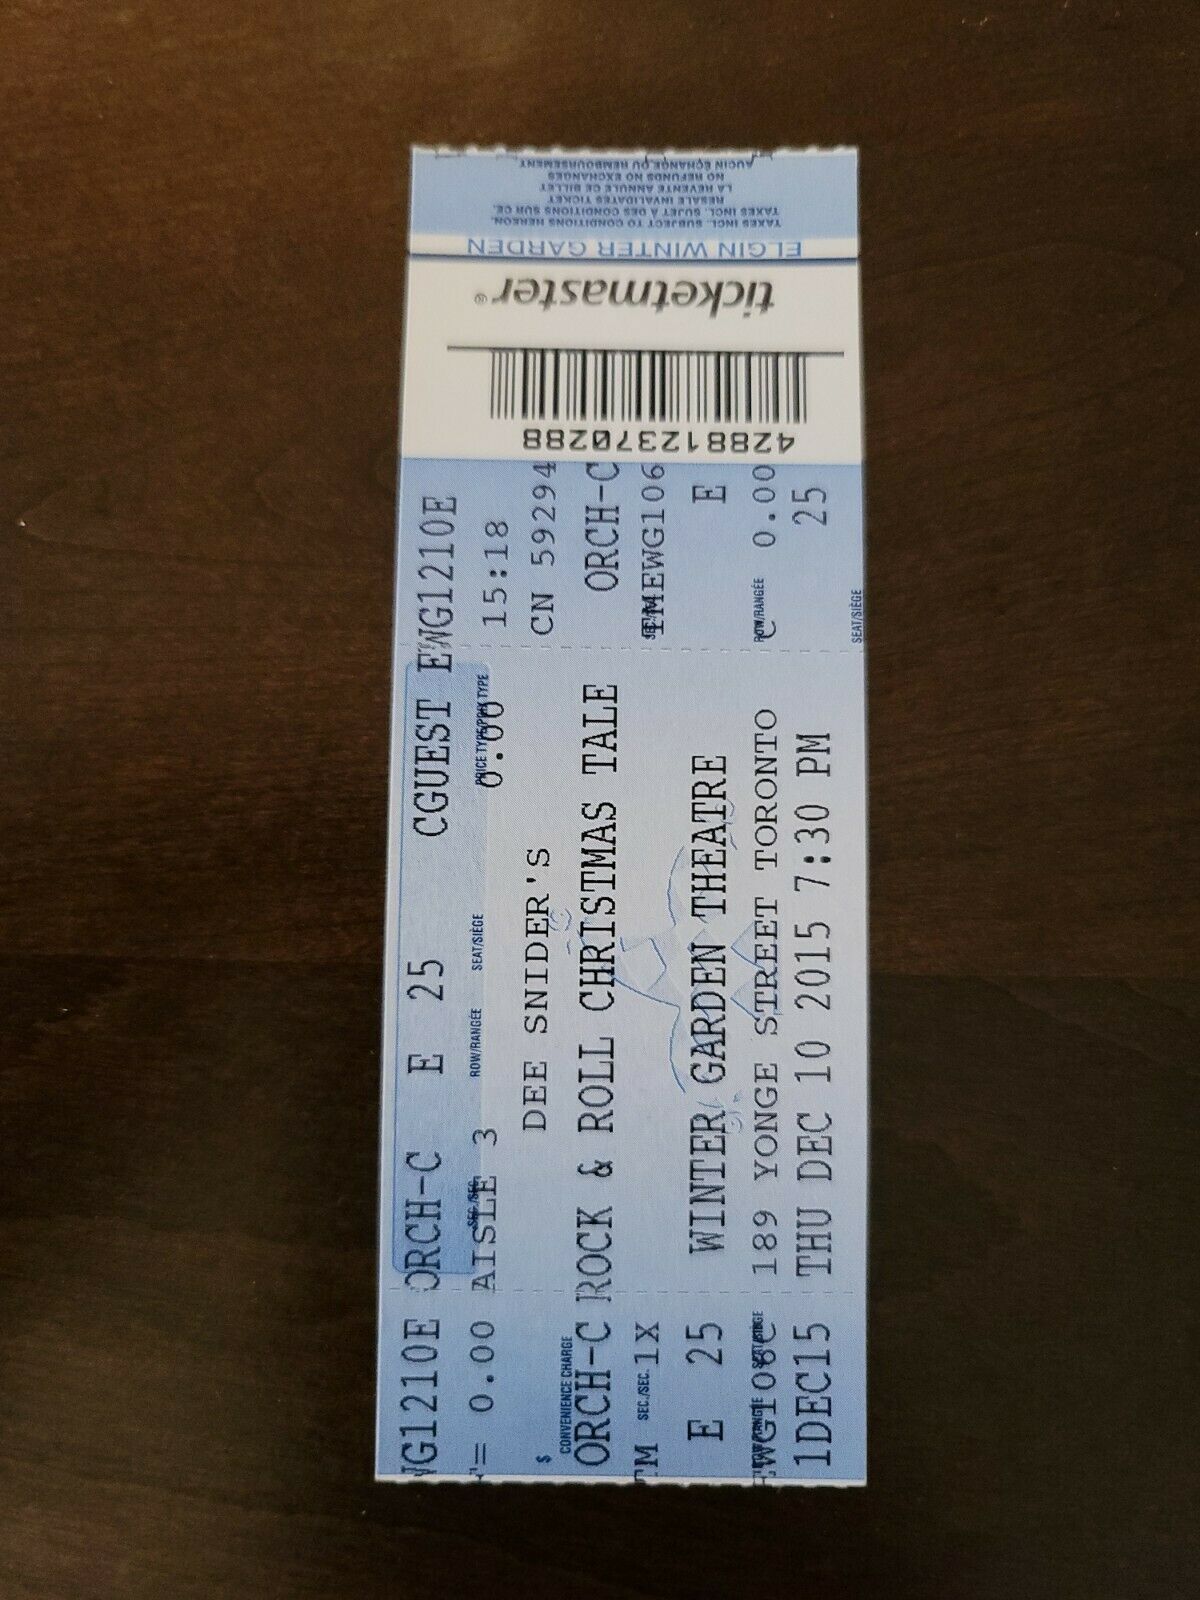 Dee Snider Rock N Roll Christmas 2015, Toronto Original Concert Ticket Stub